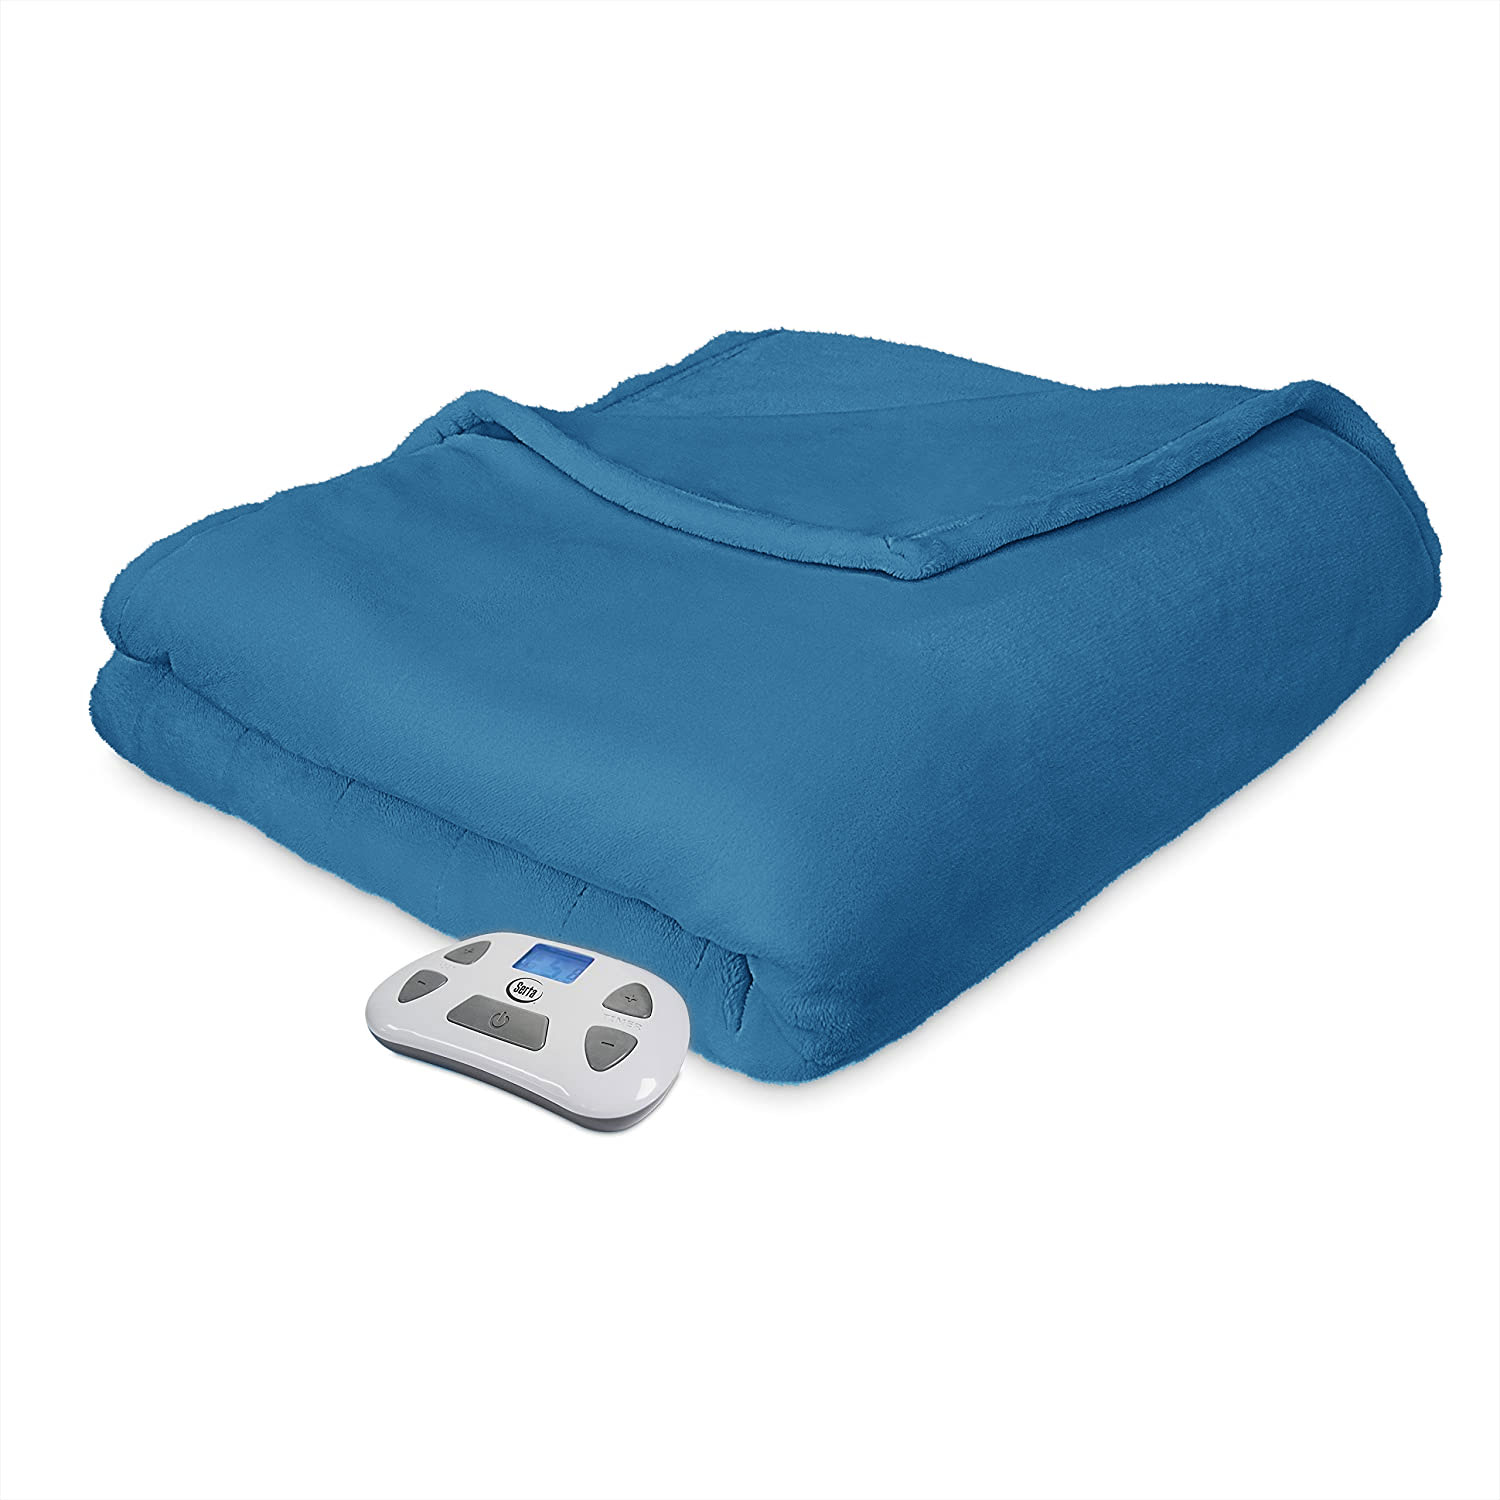 Serta Comfort Plush Electric Heated Warming Blanket